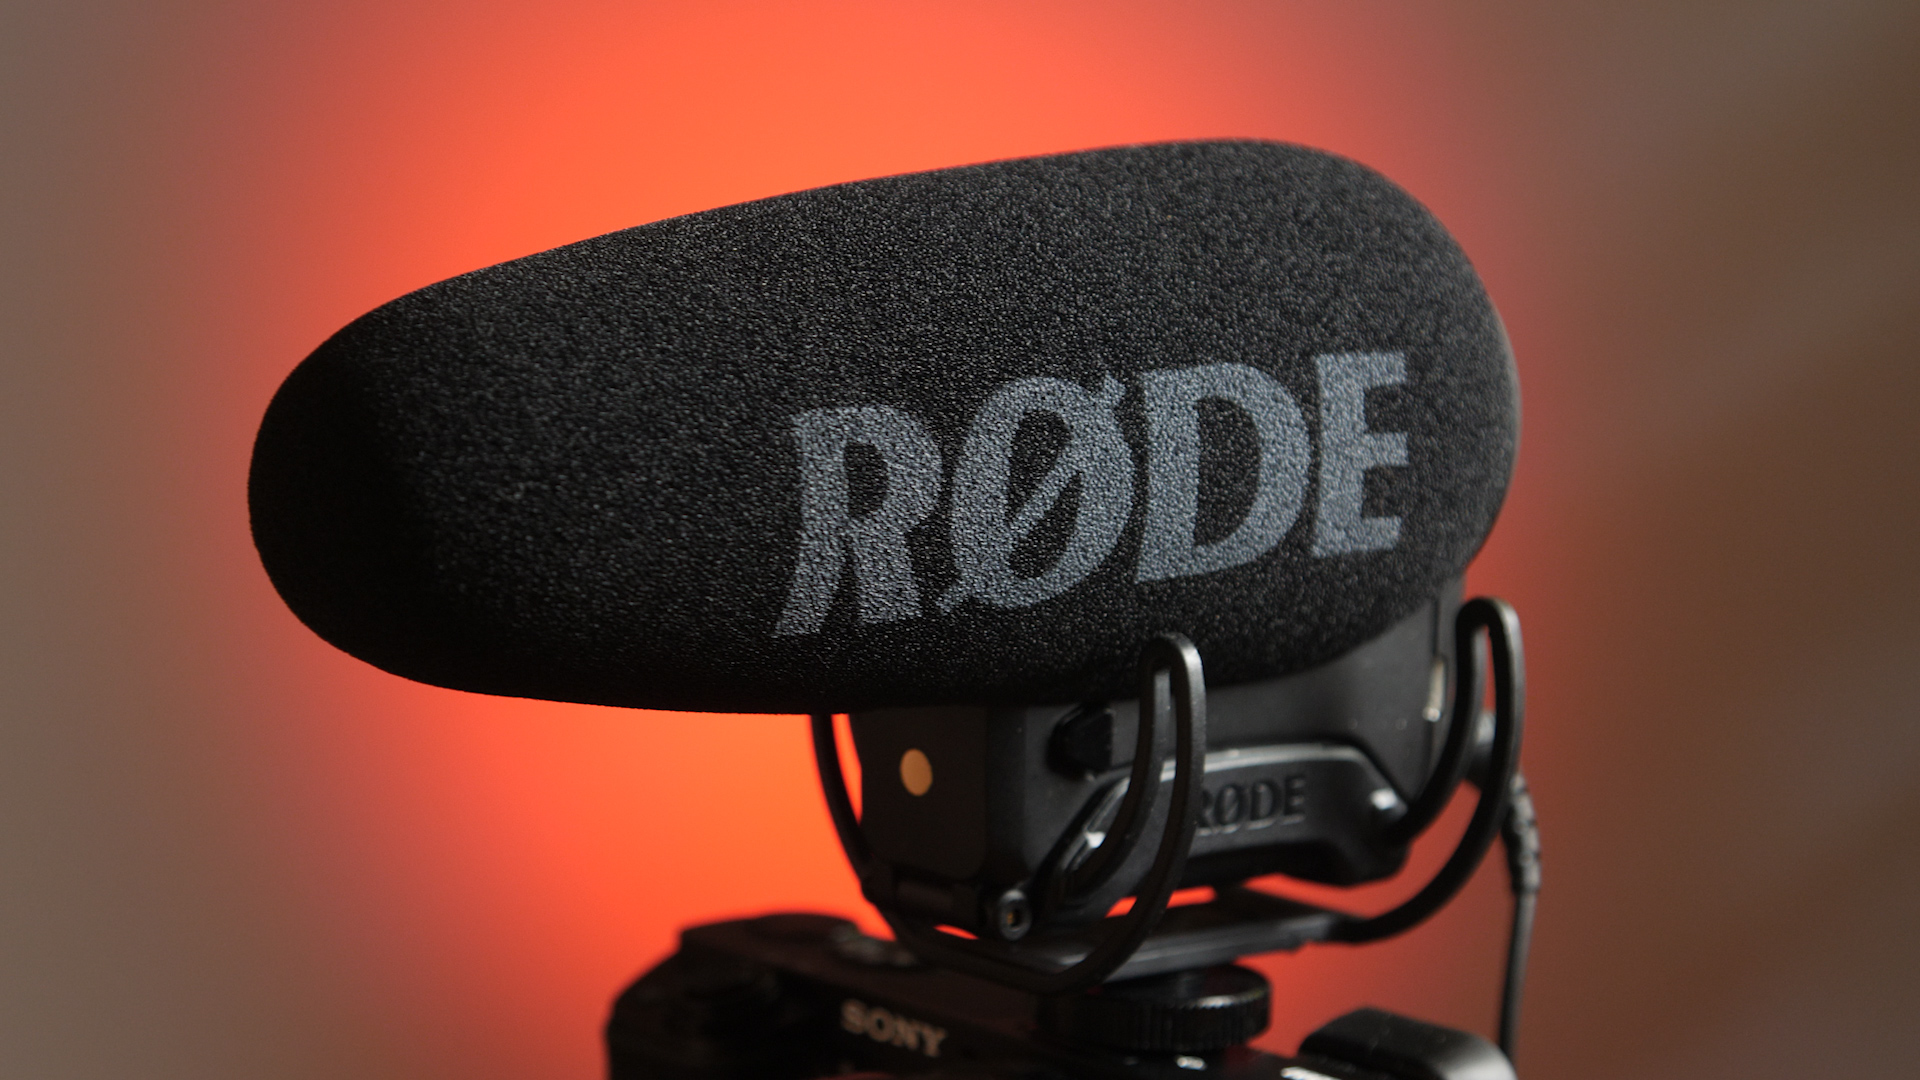 Rode on-camera mic comparison: VideoMic Pro vs Stereo VideoMic Pro